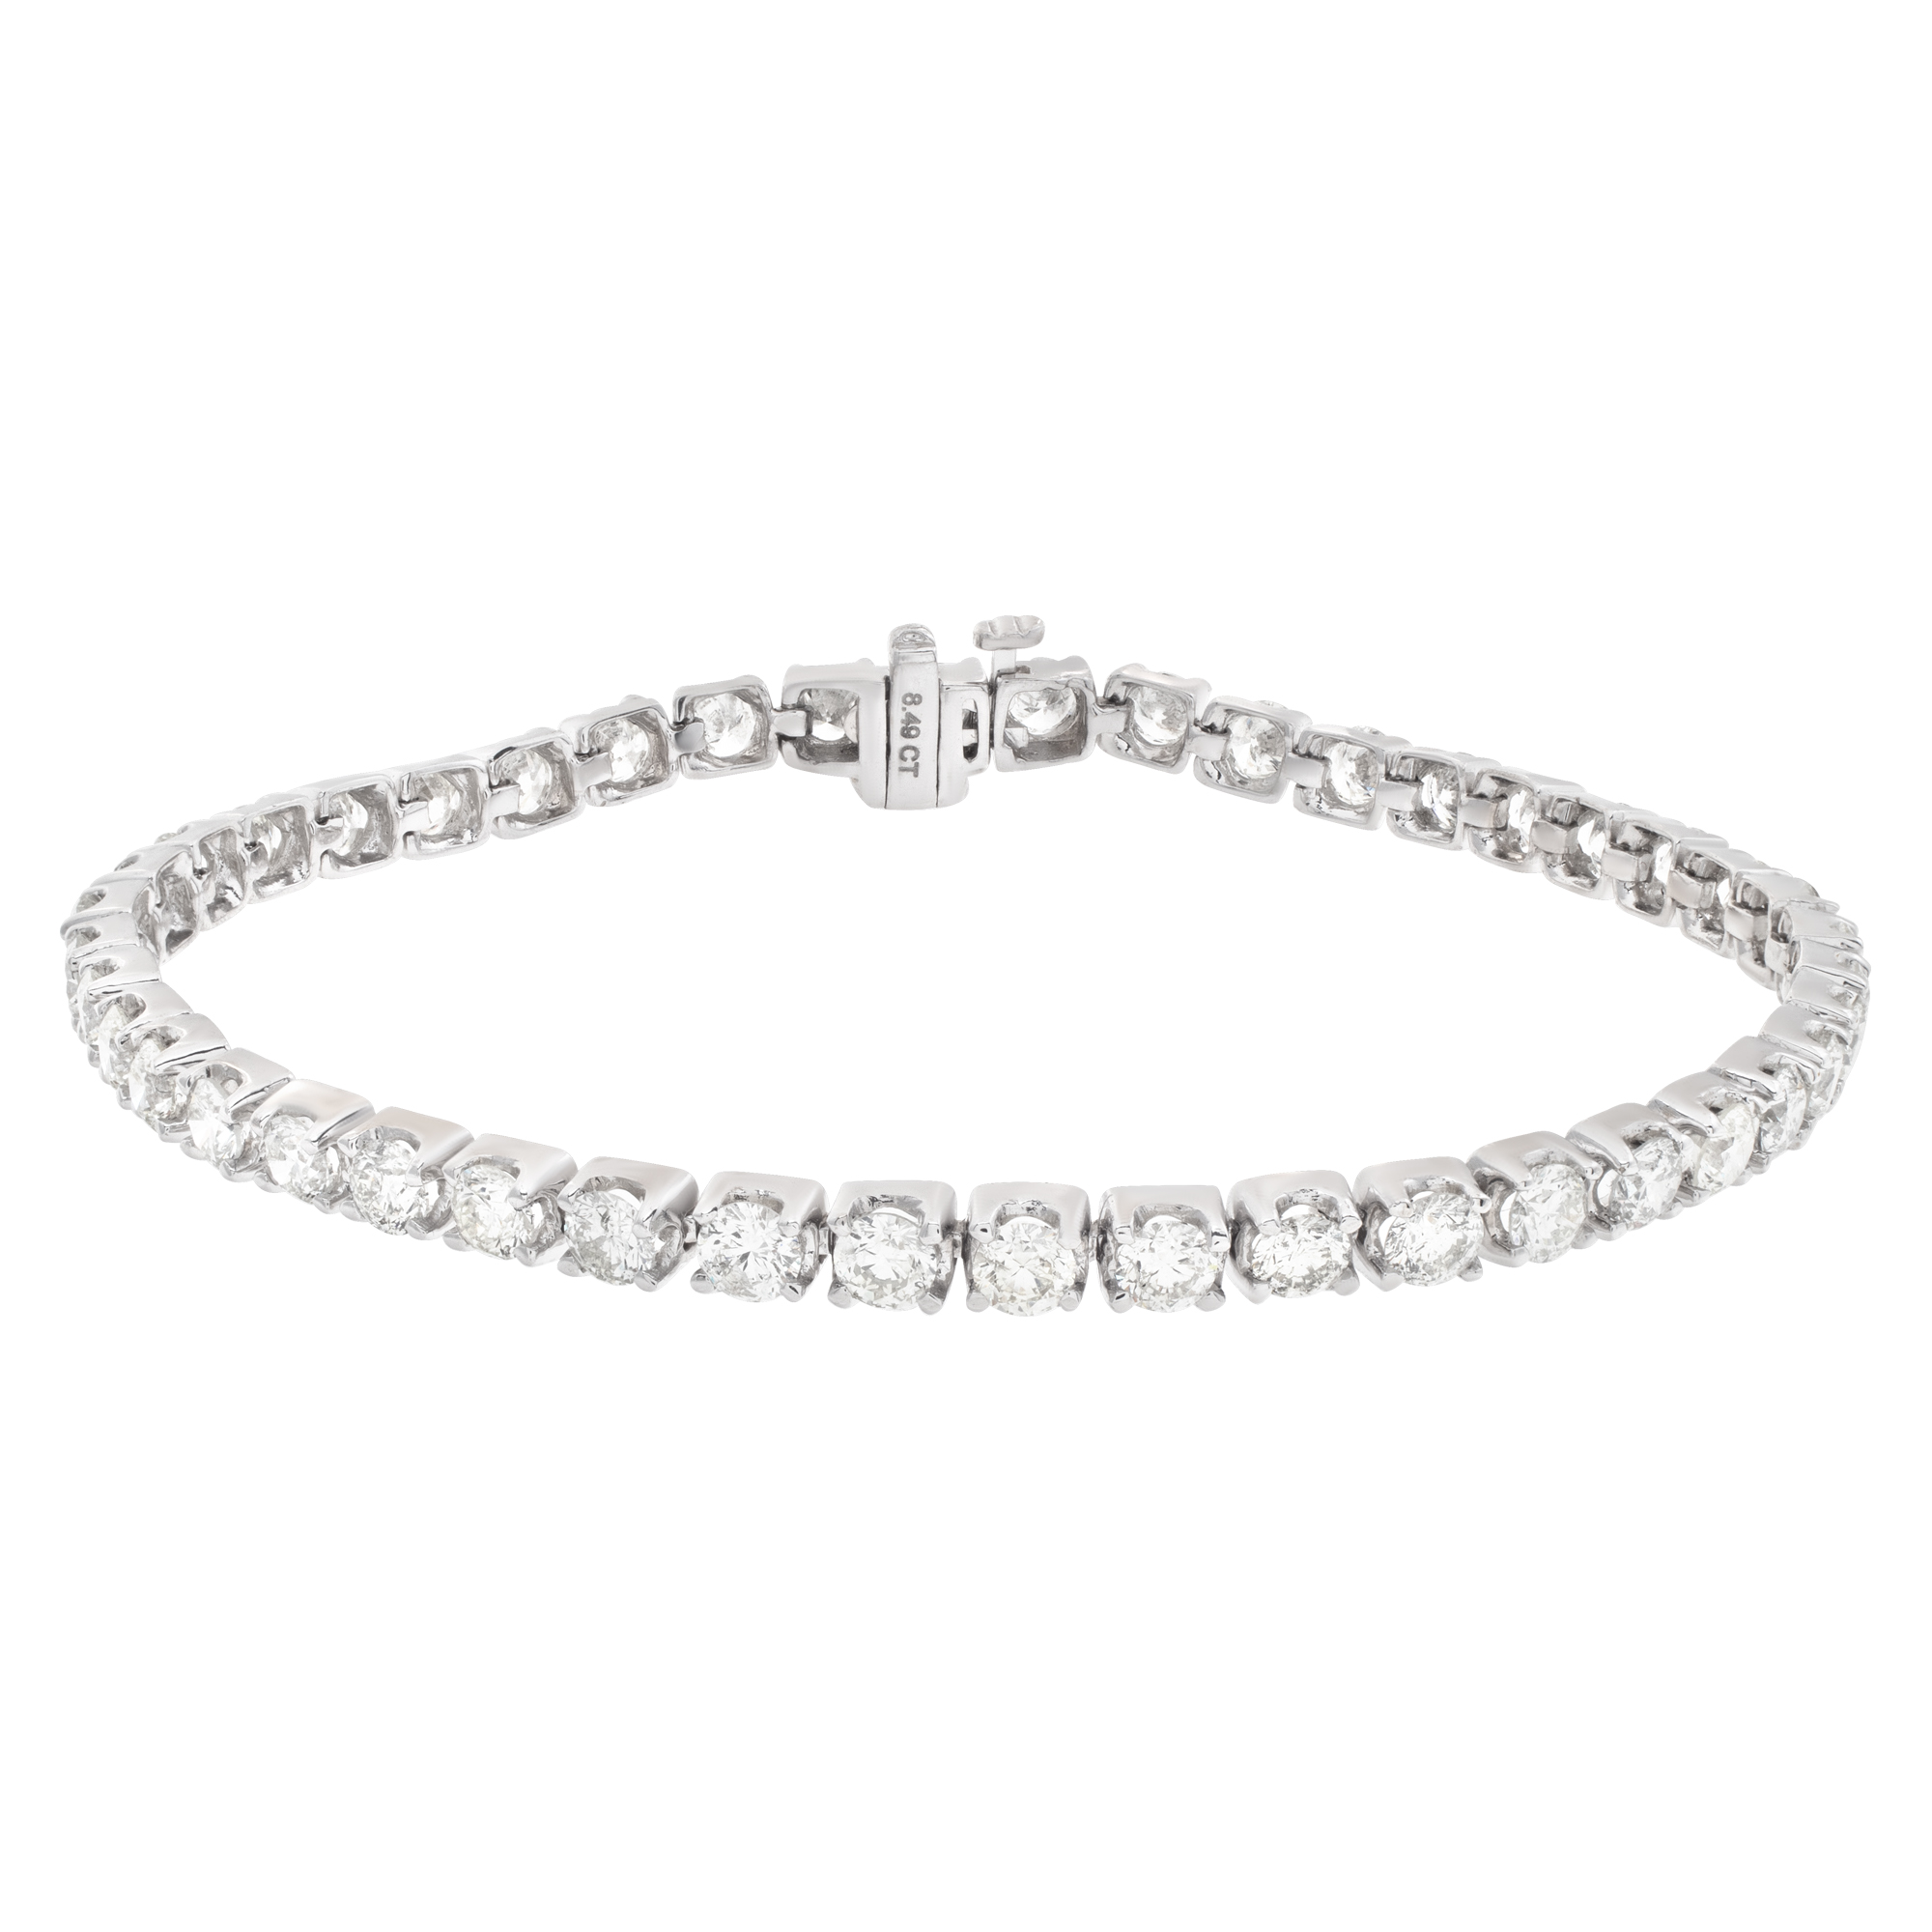 Sparkling line diamonds bracelet with approx. 8.49 carat round brilliant full cut diamond set in 14K white gold